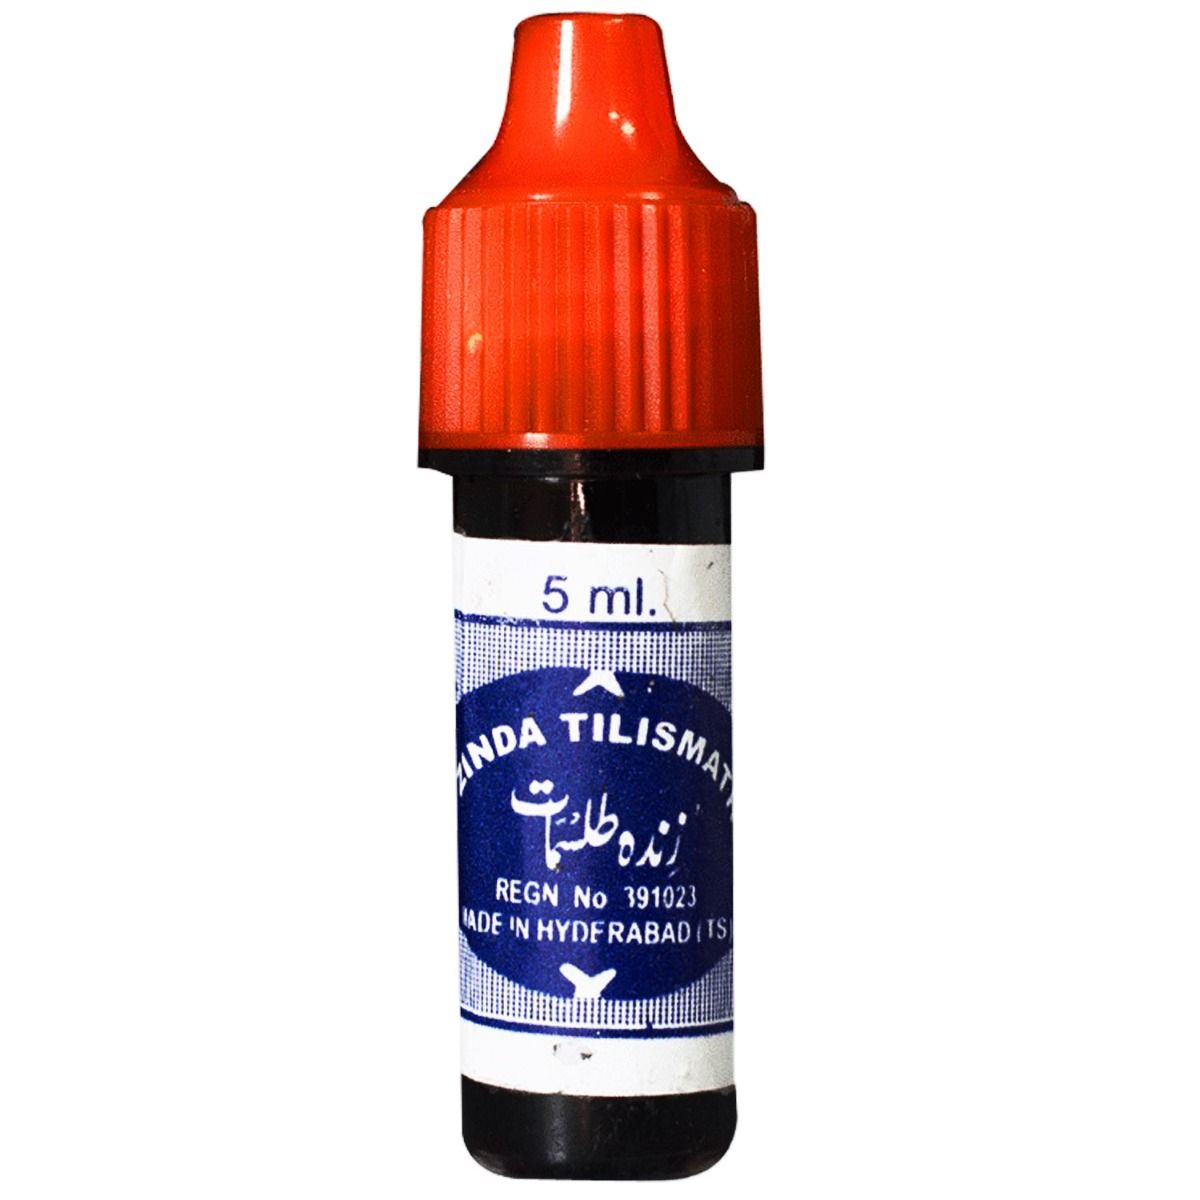 Zinda Tilismath Unani Medicine, 5 ml, Pack of 1 